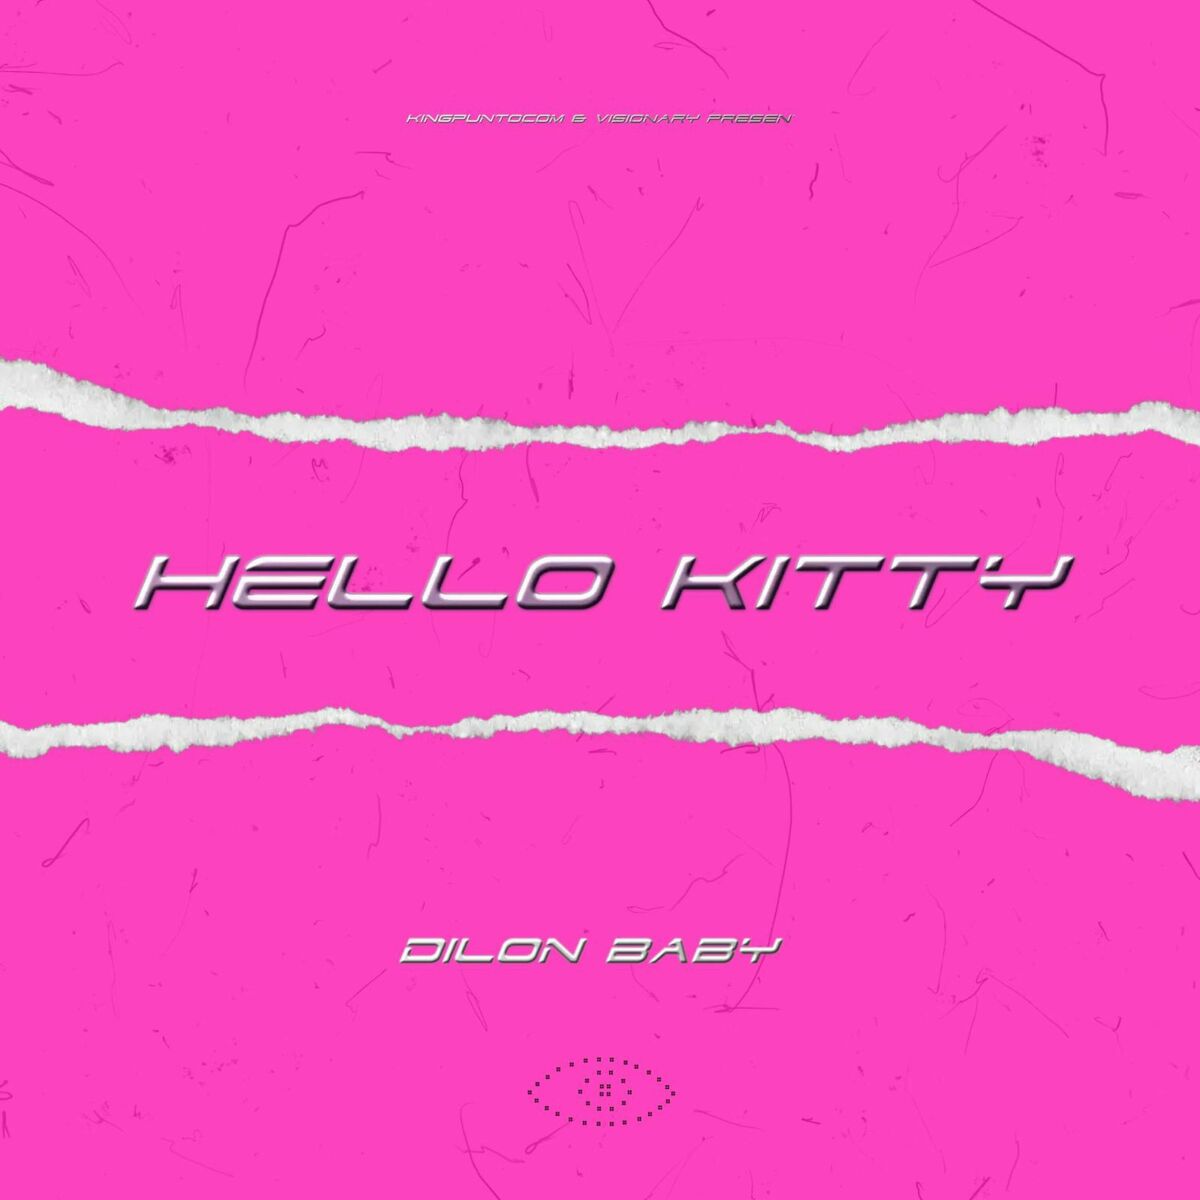 Dilon Baby – Hello Kitty